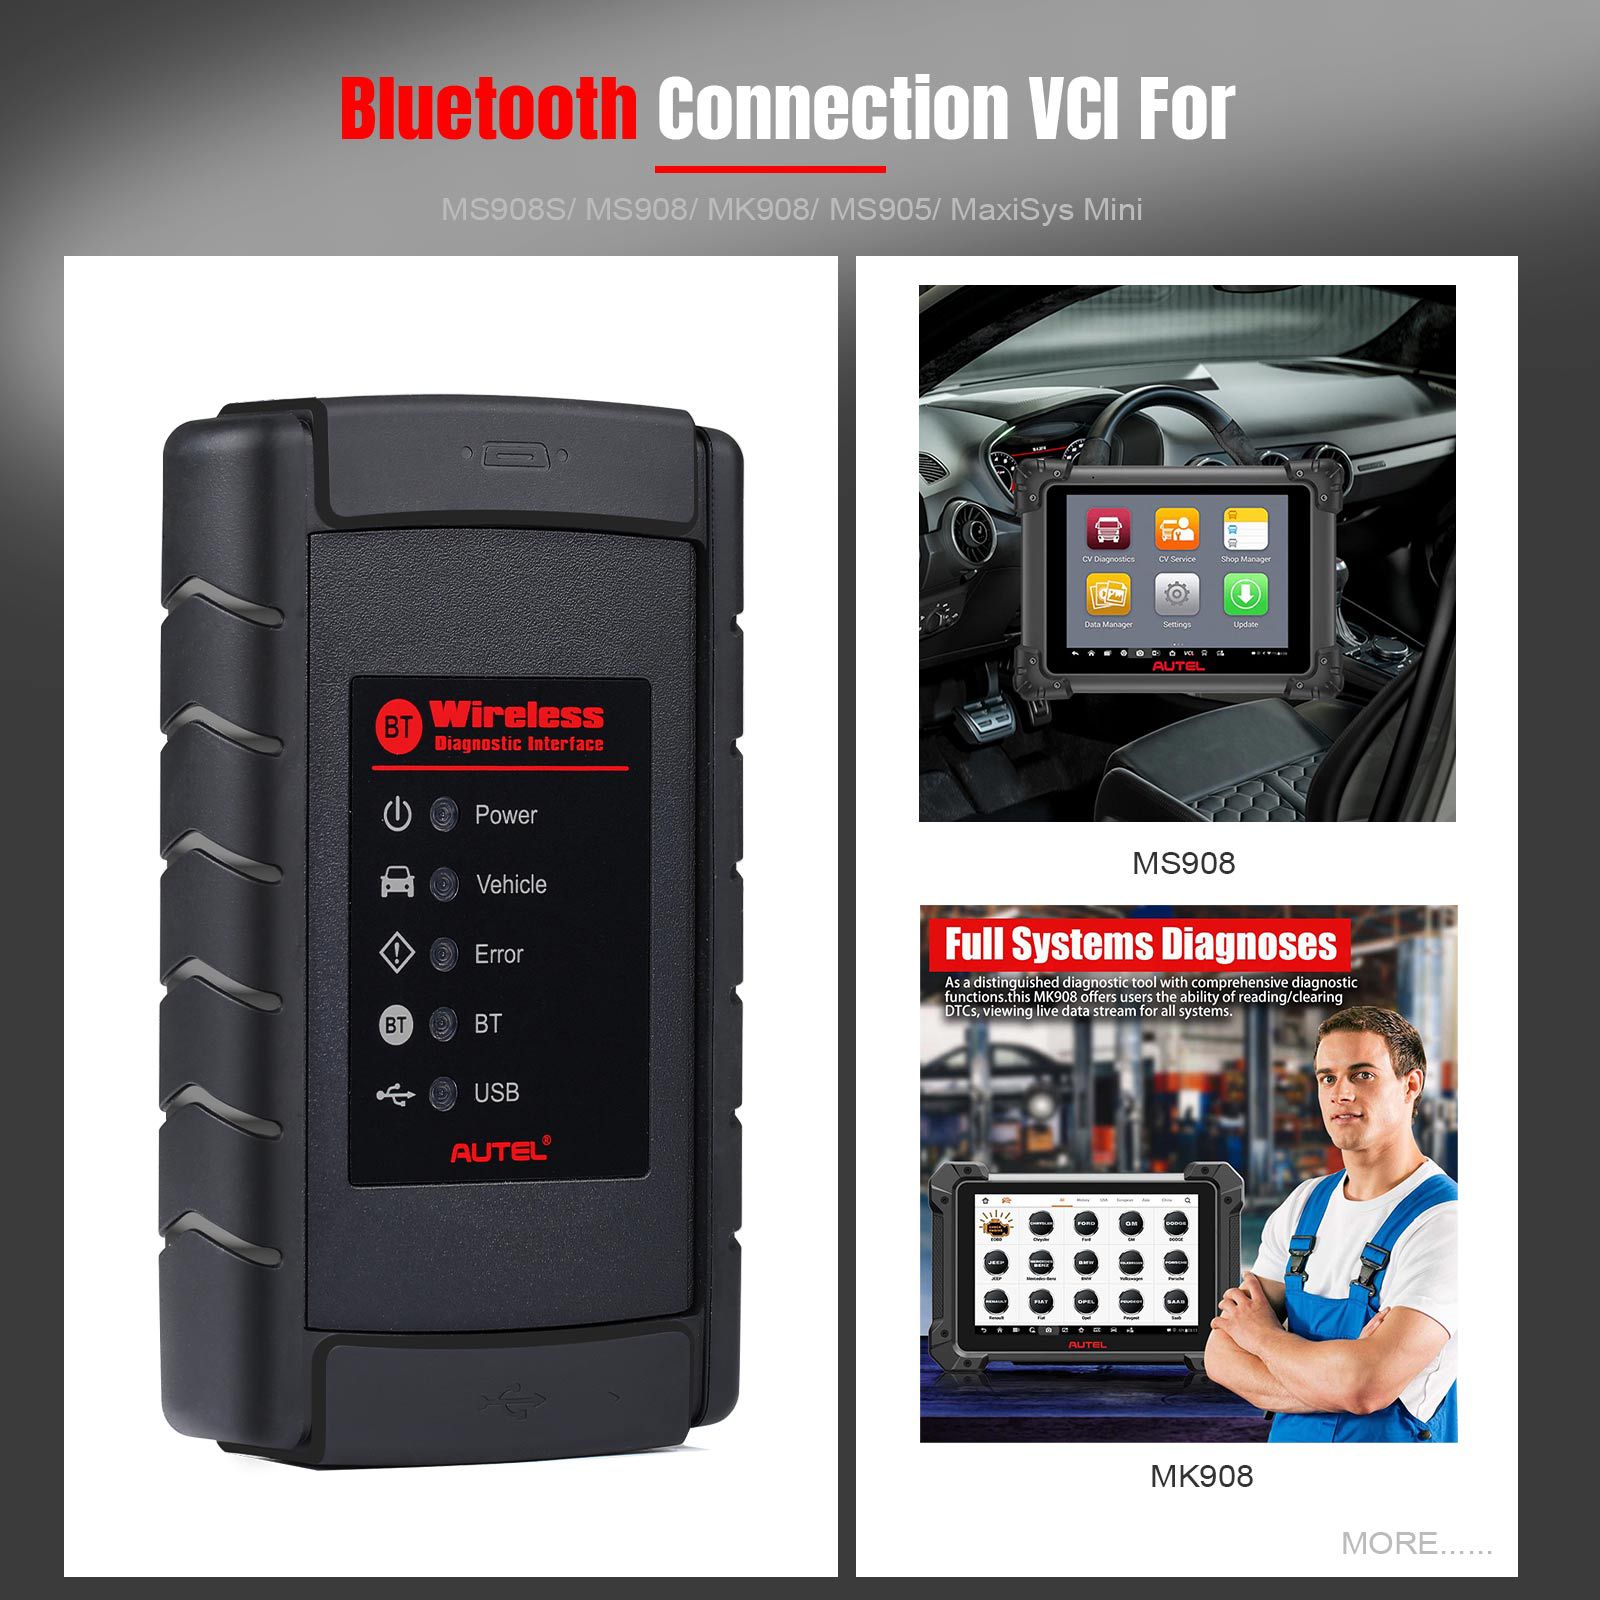 El original Adel VCI Bluetooth Adapter Wireless Diagnosis Interface Bluetooth Connection VCI es adecuado para ms908s / ms908 / mk908 / ms905 / maxisys Mini